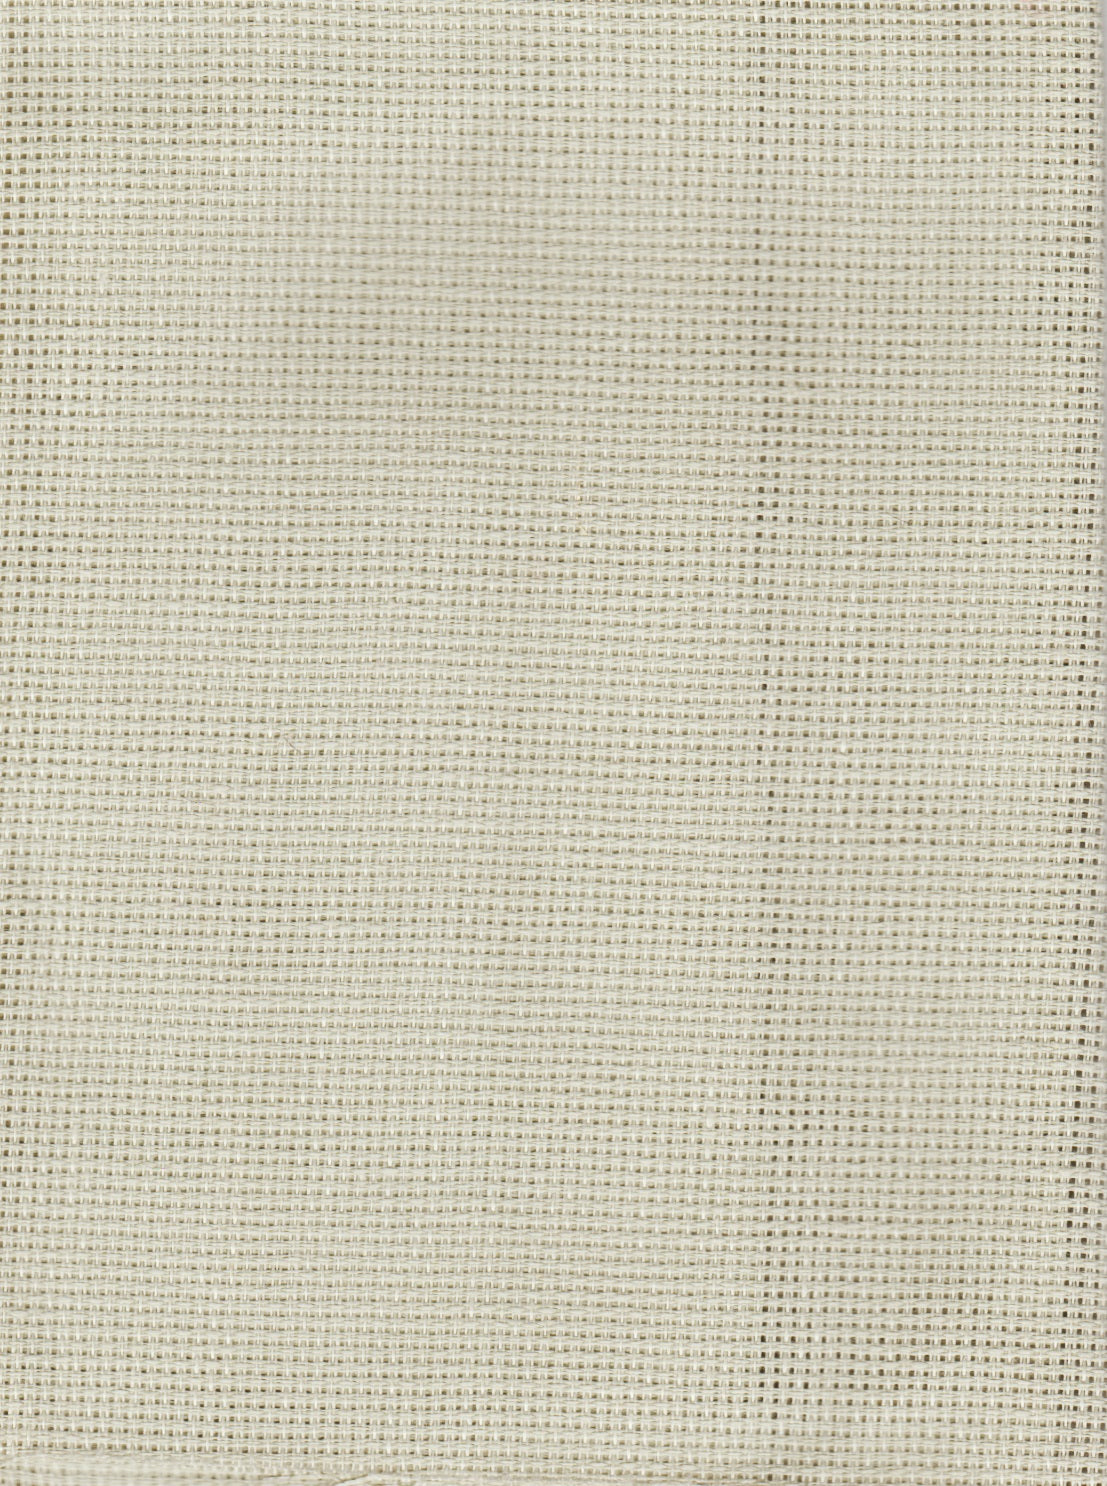 Wichelt Betsy Ross 10ct 19x17 Winter White cross stitch Fabric